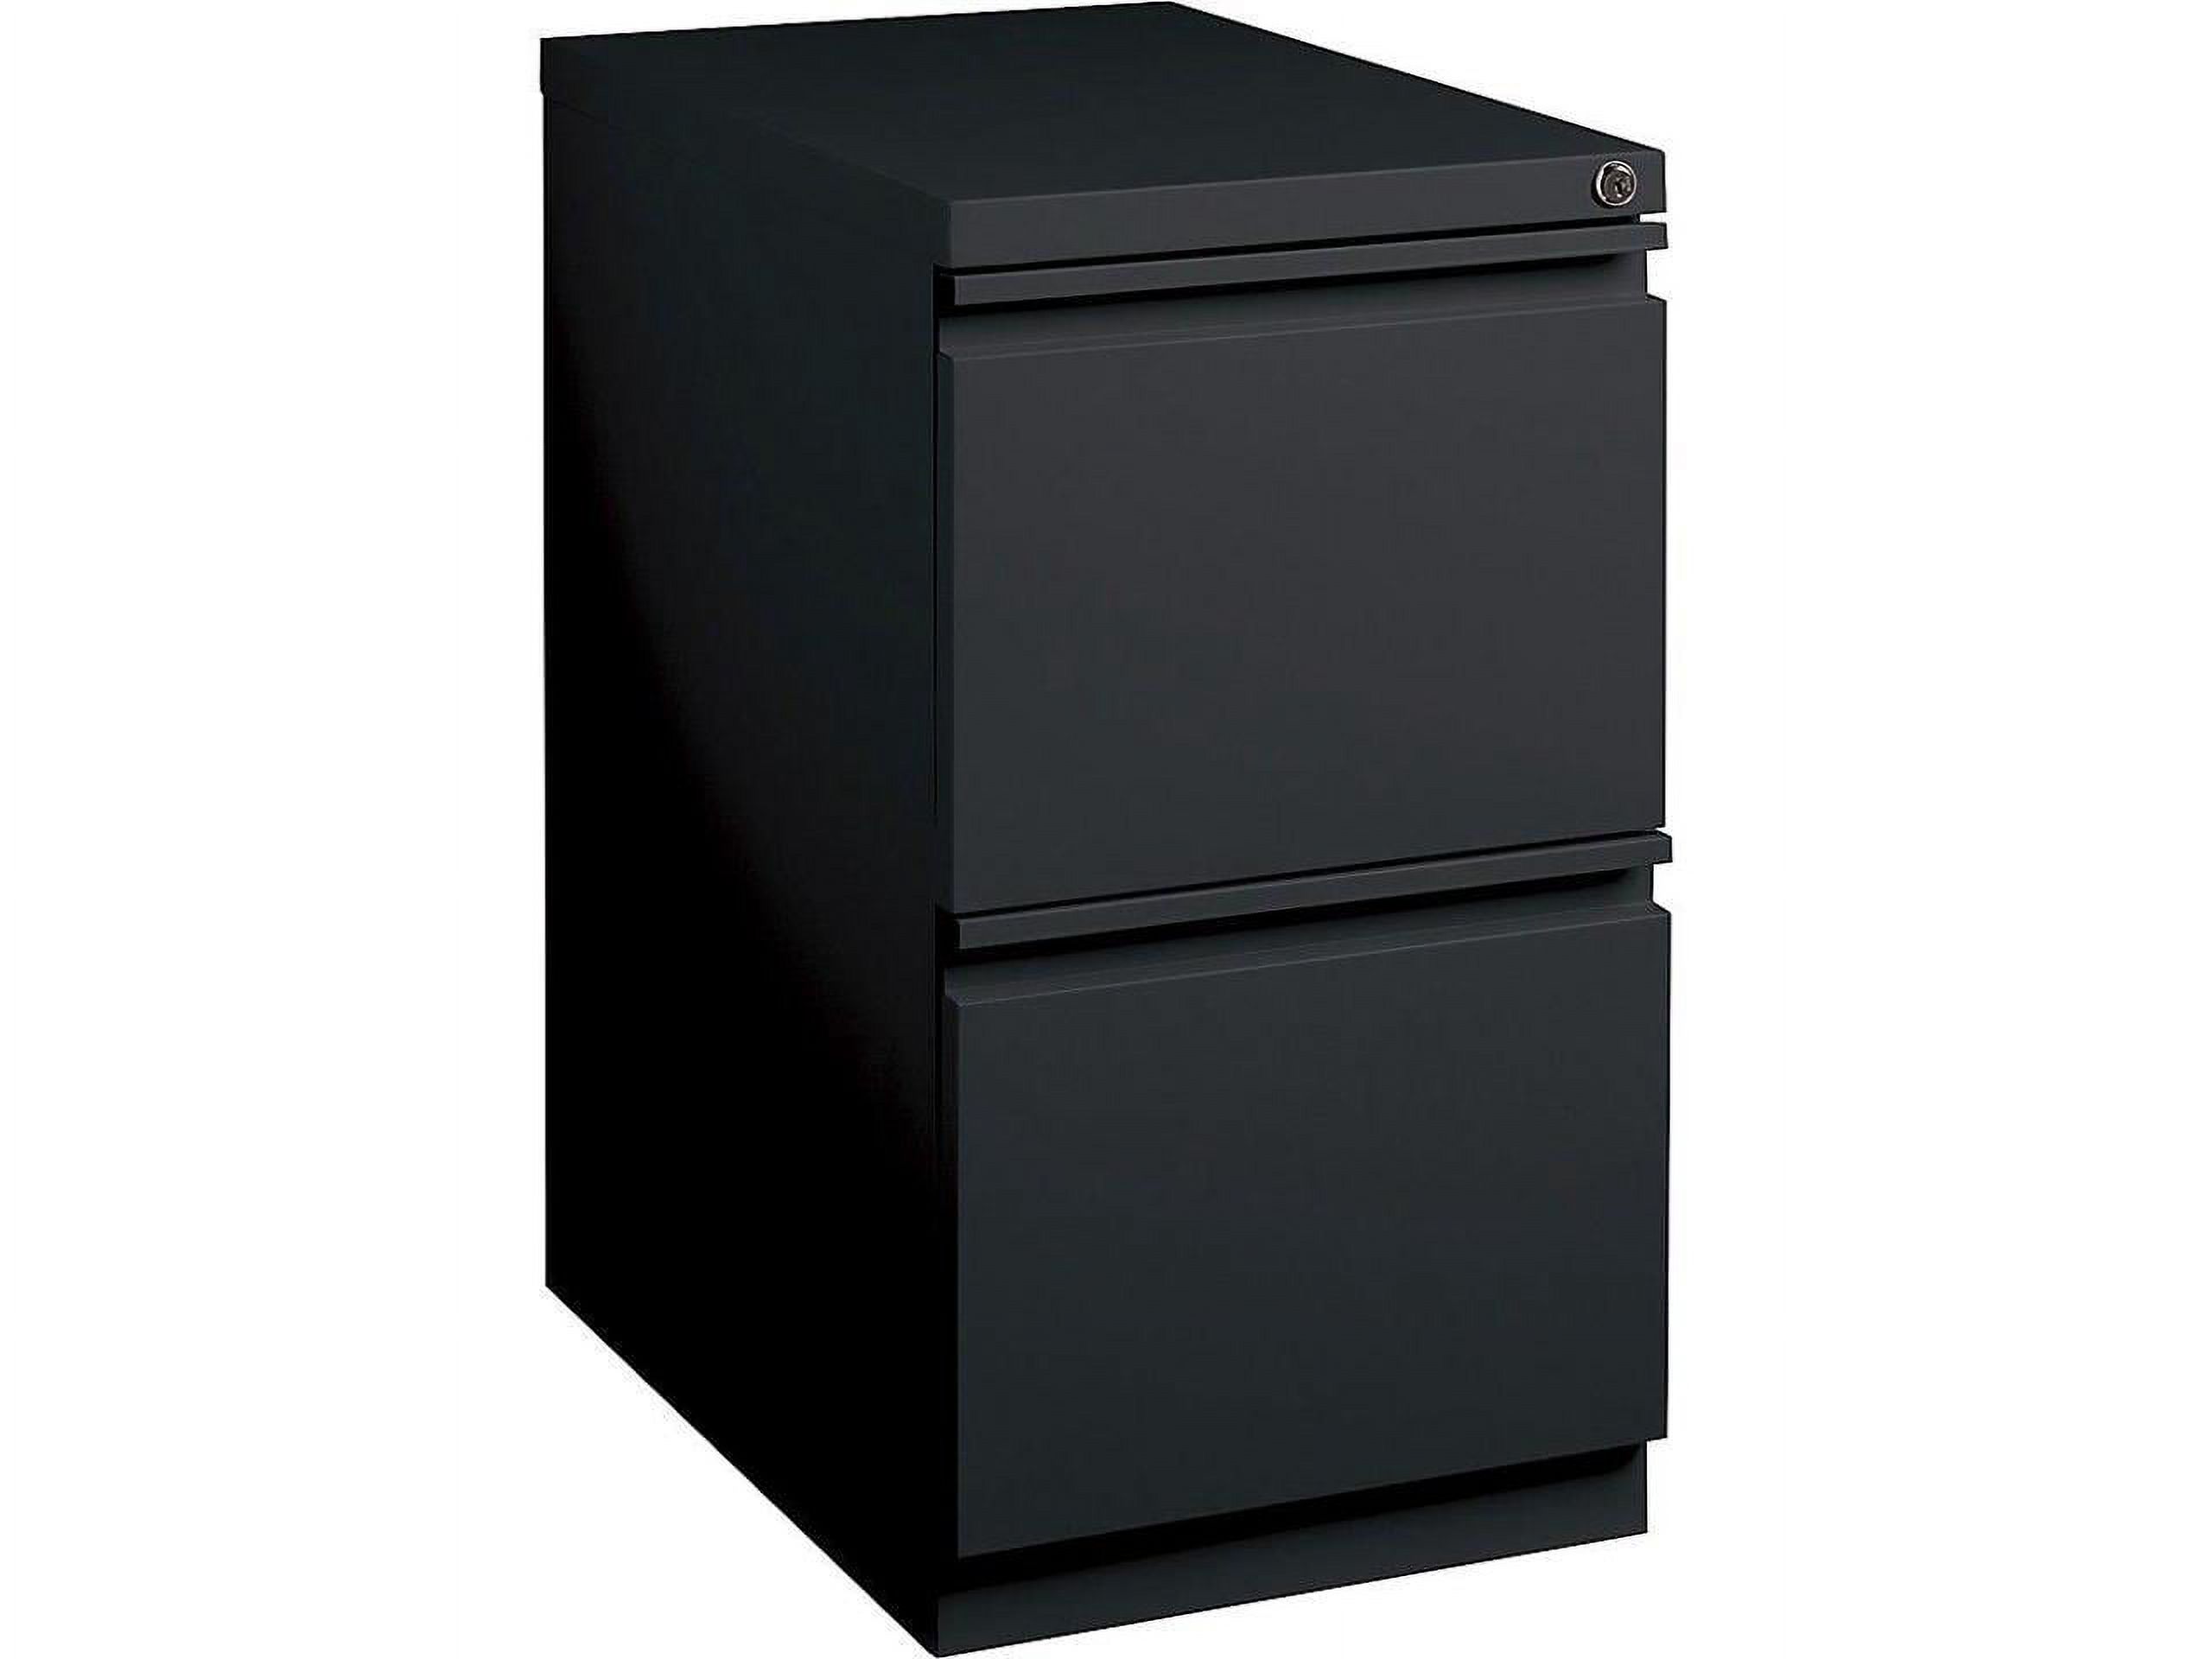 2 Drawers Vertical Steel Lockable Filing Cabinet, Black - image 4 of 12